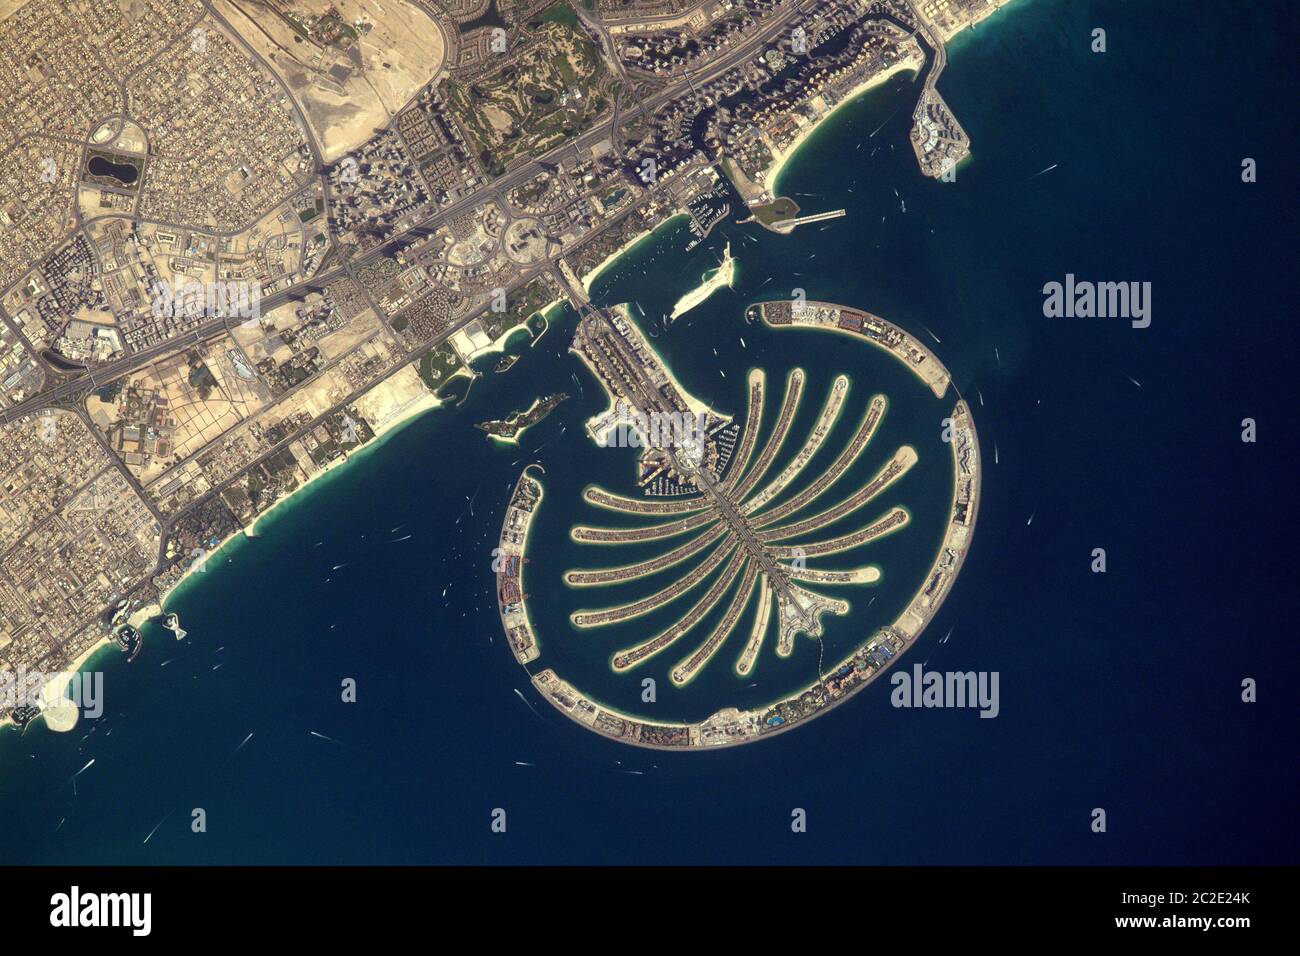 PALM ISLAND, DUBAI, Emirati Arabi Uniti - 28 aprile 2017 - l'astronauta francese Thomas Pesquet ha preso questa immagine notevole di Palm Island Dubai Emirati Arabi Uniti durante Foto Stock